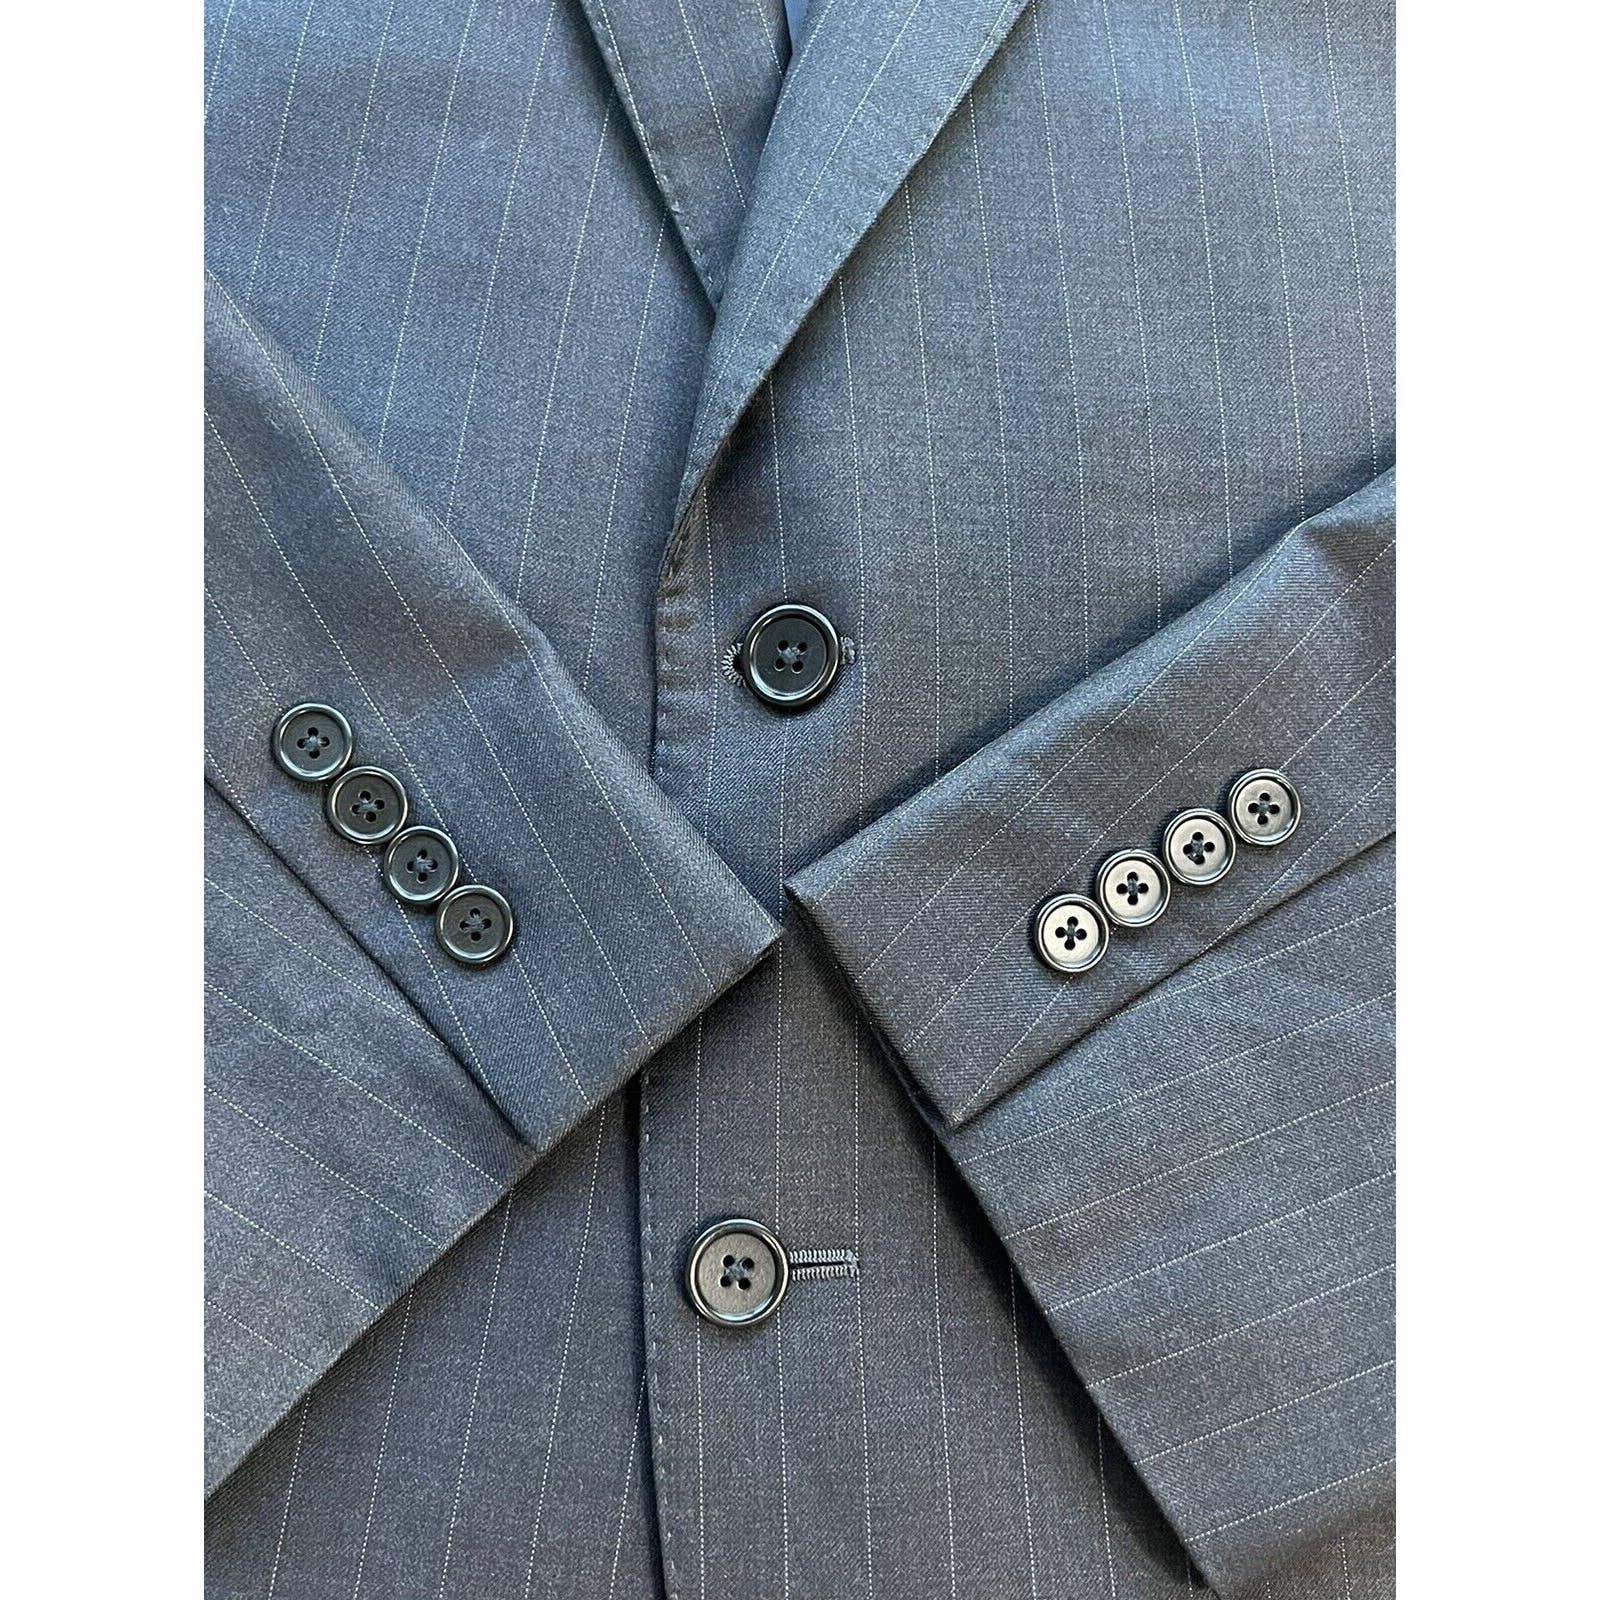 Jos A Bank Signature Gold 2 Button Suit Jacket Men’s 43R Wool Black Pinstripe